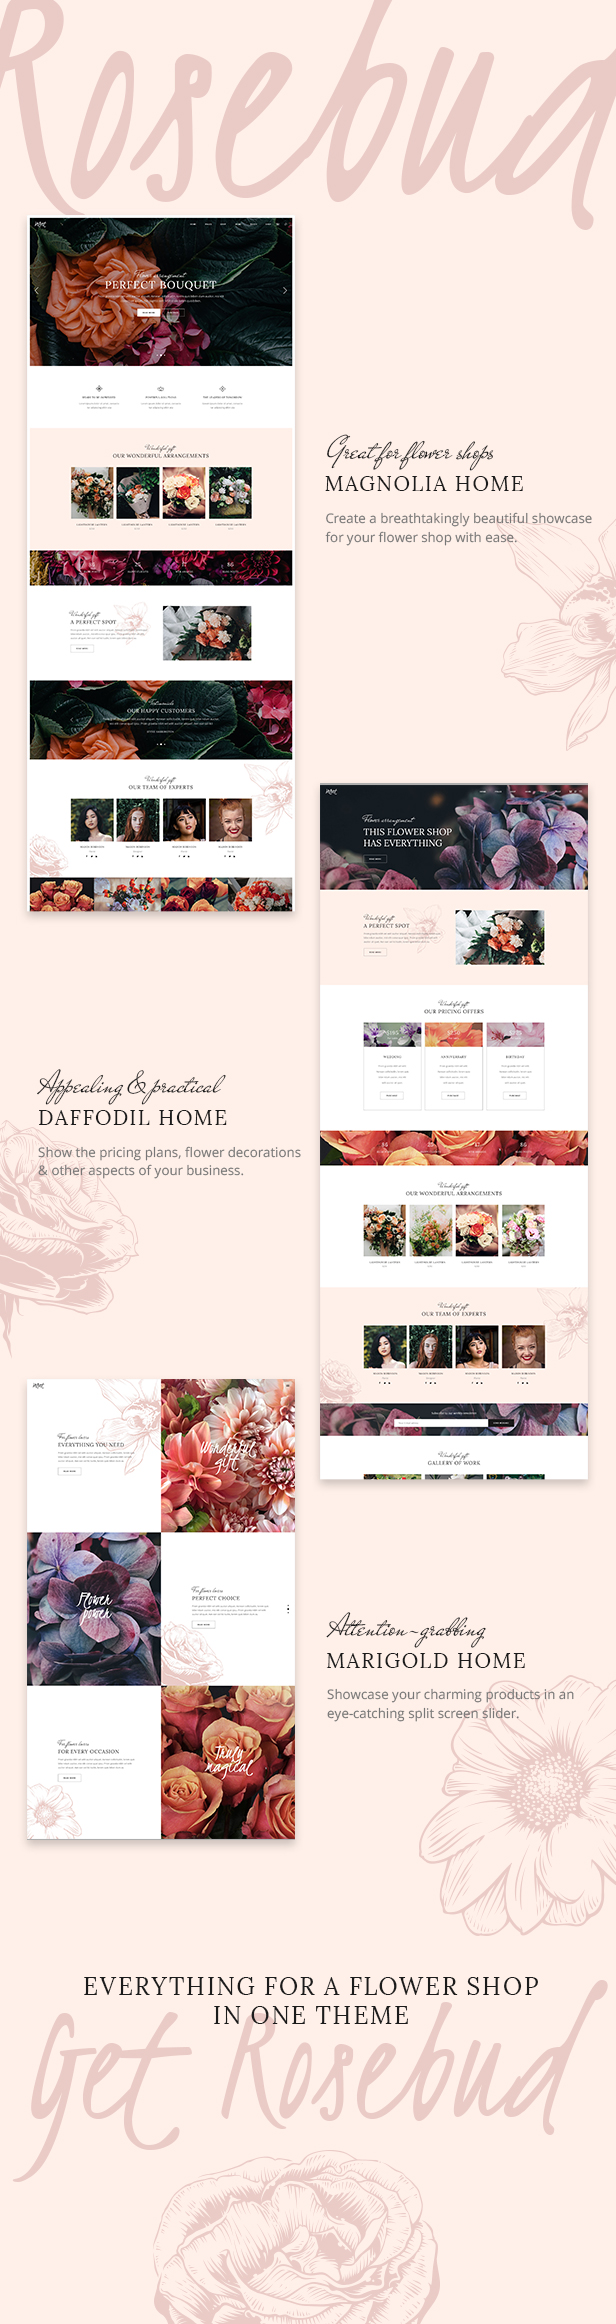 Rosebud - Flower Shop and Florist WordPress Theme - 1